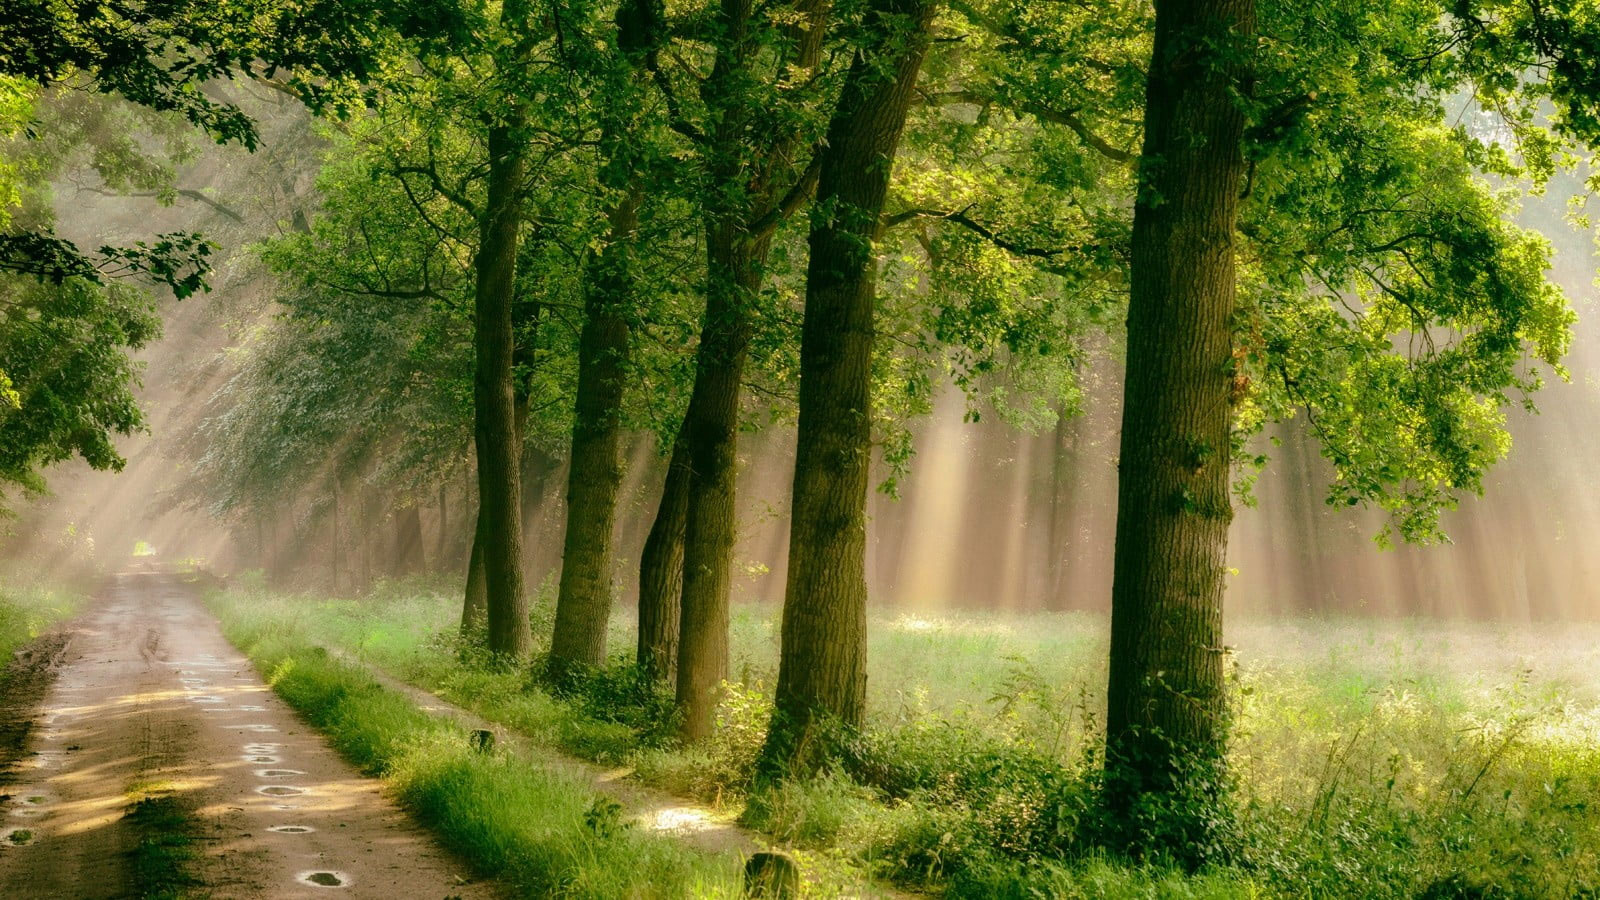 Green leafed trees wallpaper, forest, road, grass, mist, path, rain, sunlight